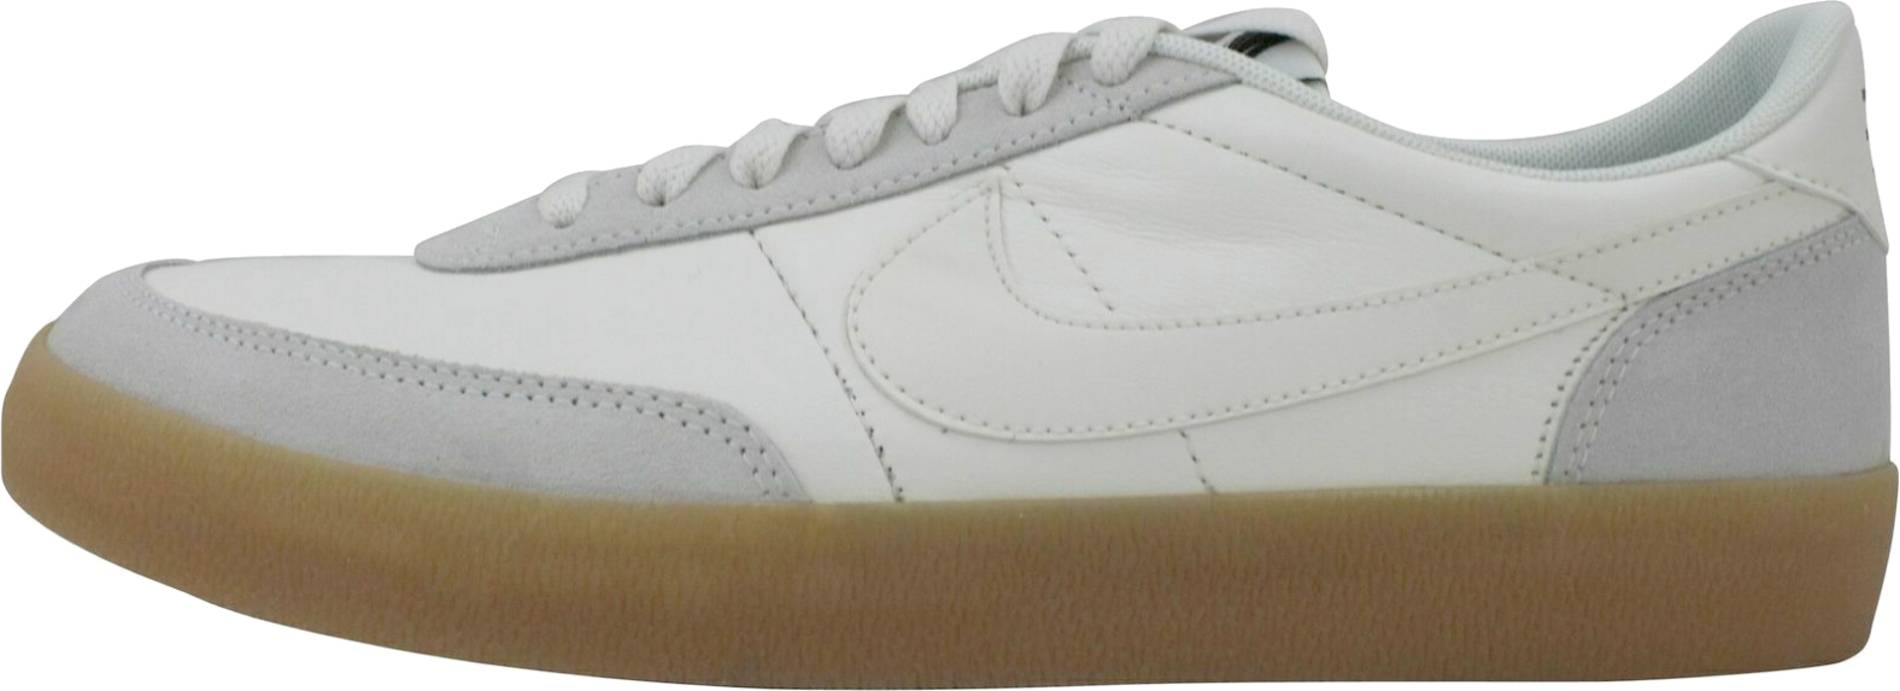 nike white gum sole shoes